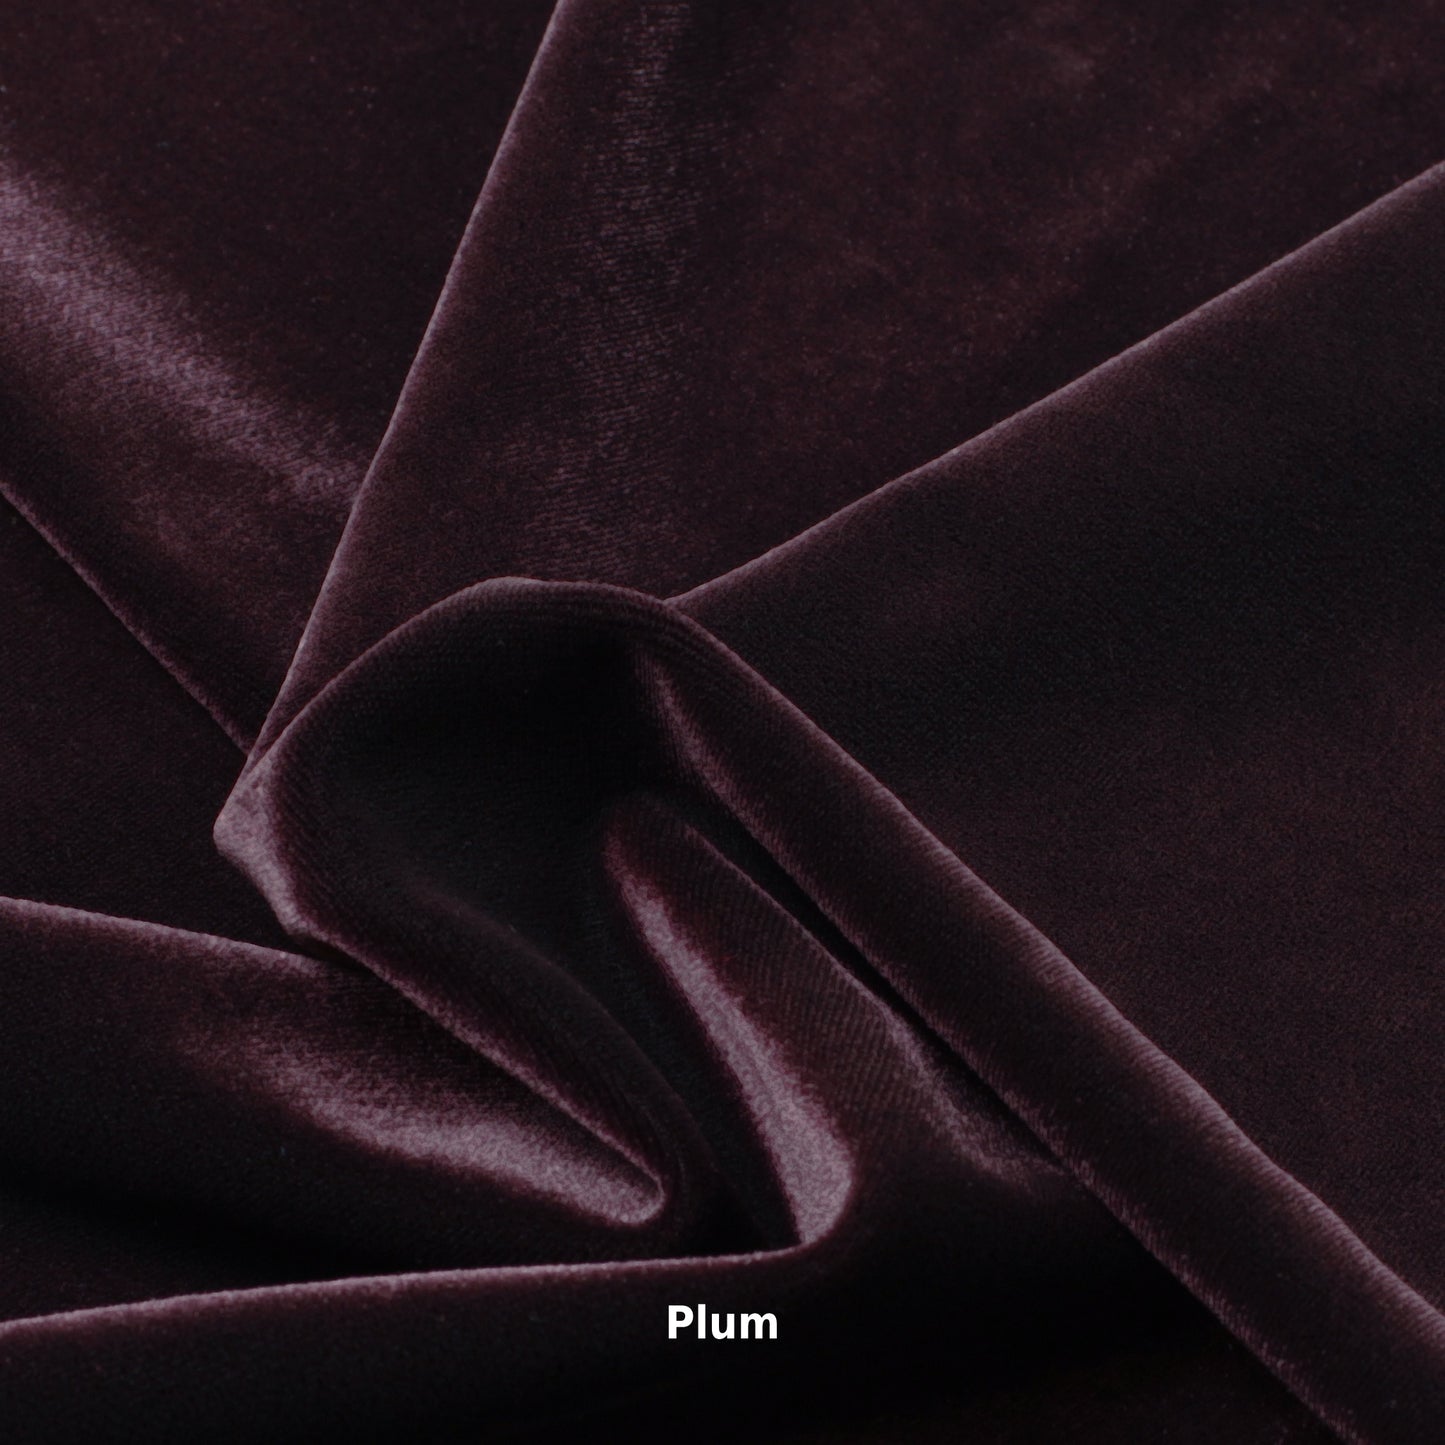 Stretch Velvet Knit Fabric, Deep Burgundy • Promenade Fine Fabrics